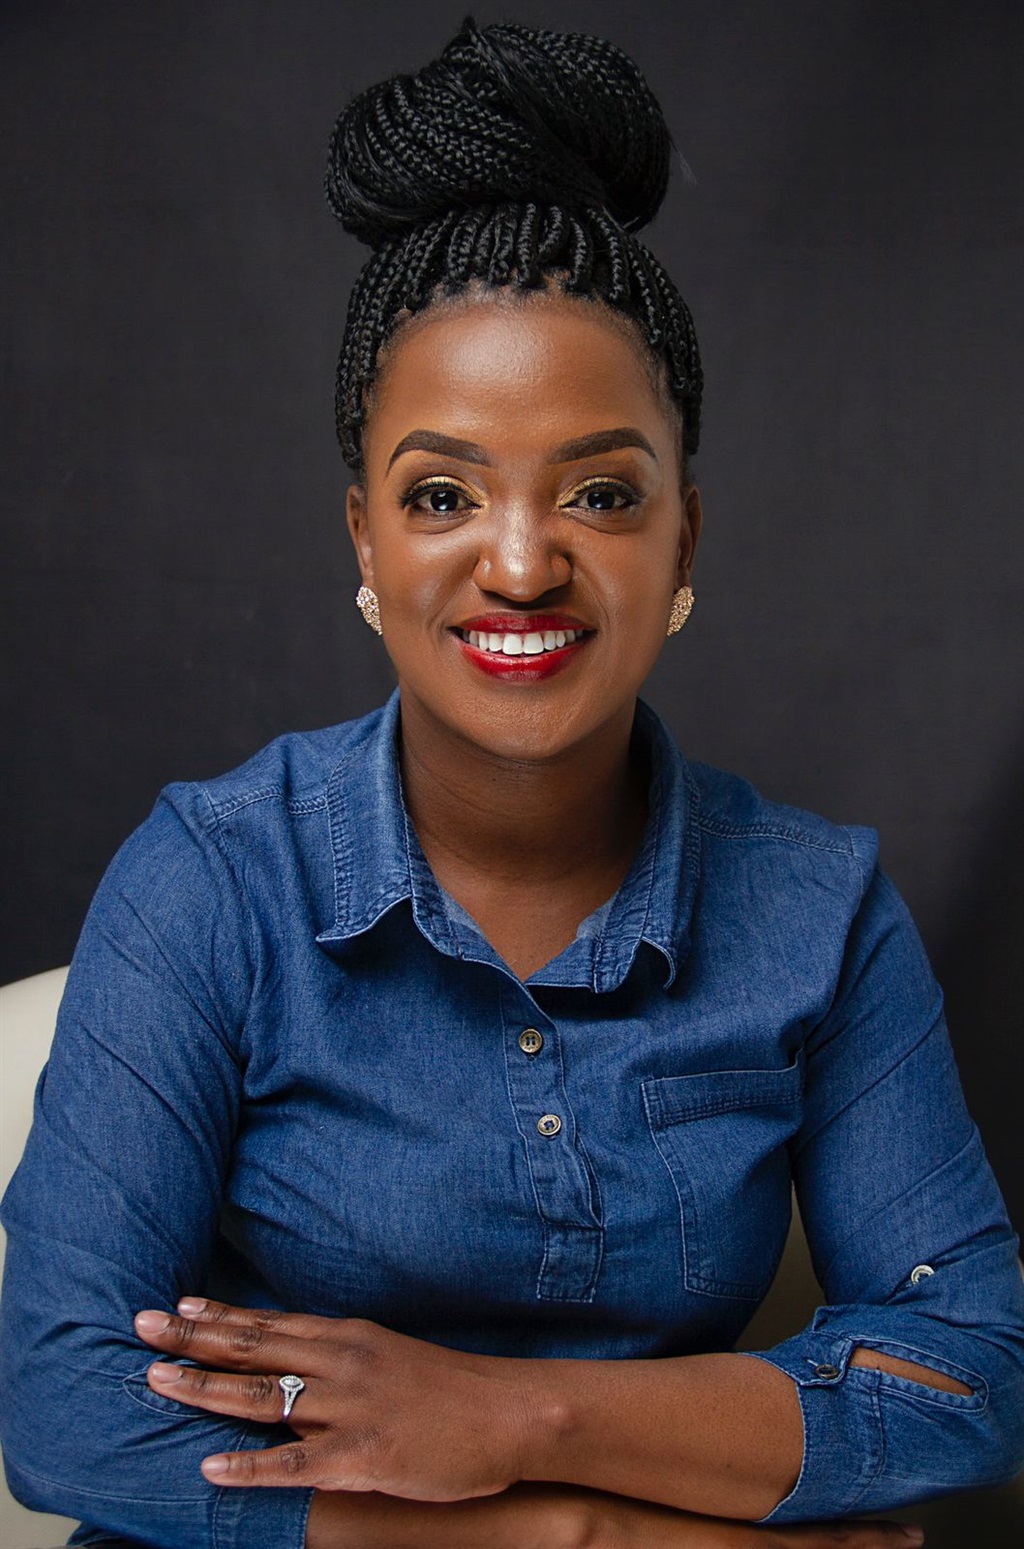 TV and radio host Mpho Putini said she enjoys being behind the mic. 